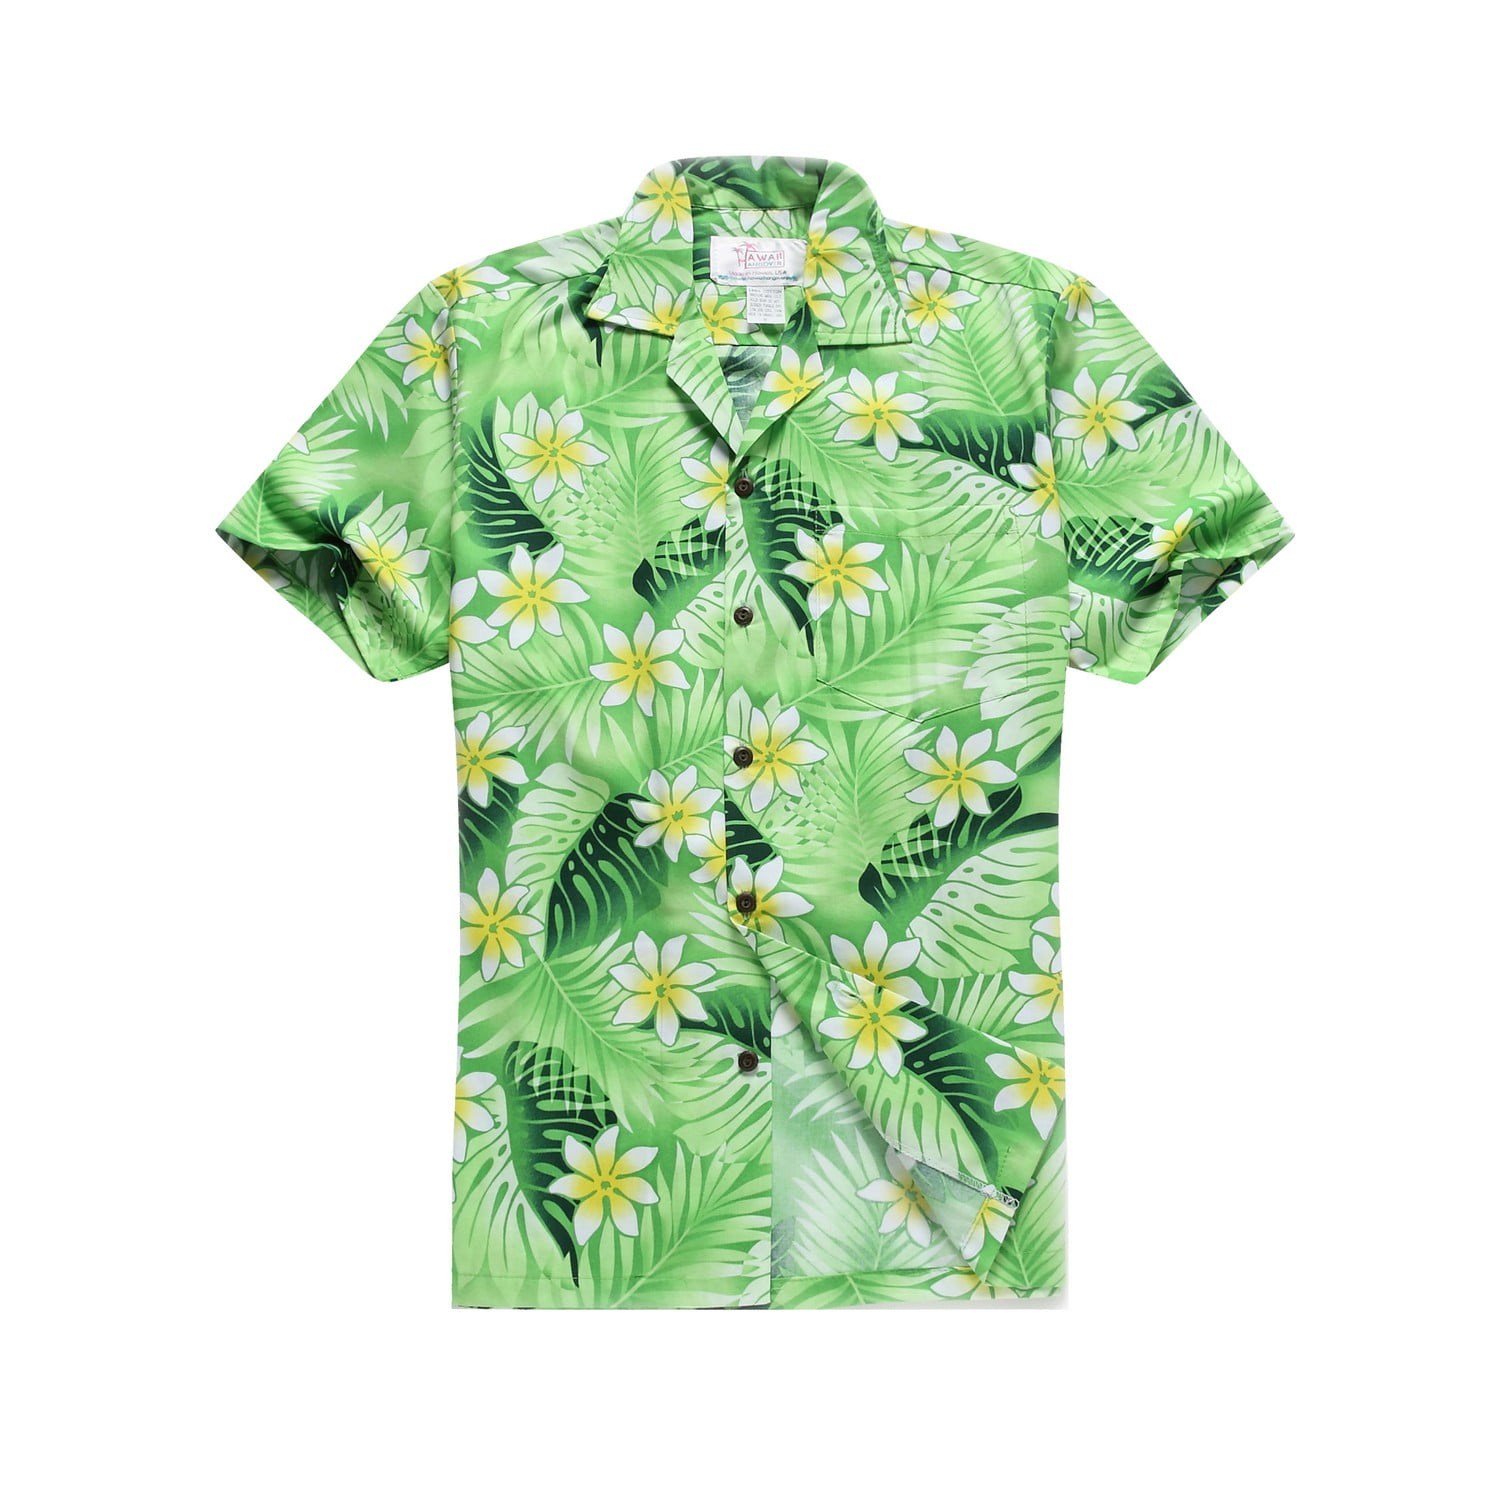 Polynesian Plumeria Mix Gold Hawaiian Shirt Cotton Casual Button Down Shirt Unisex Tropical Summer All Seasons Vacation Full Size S-5XL Size